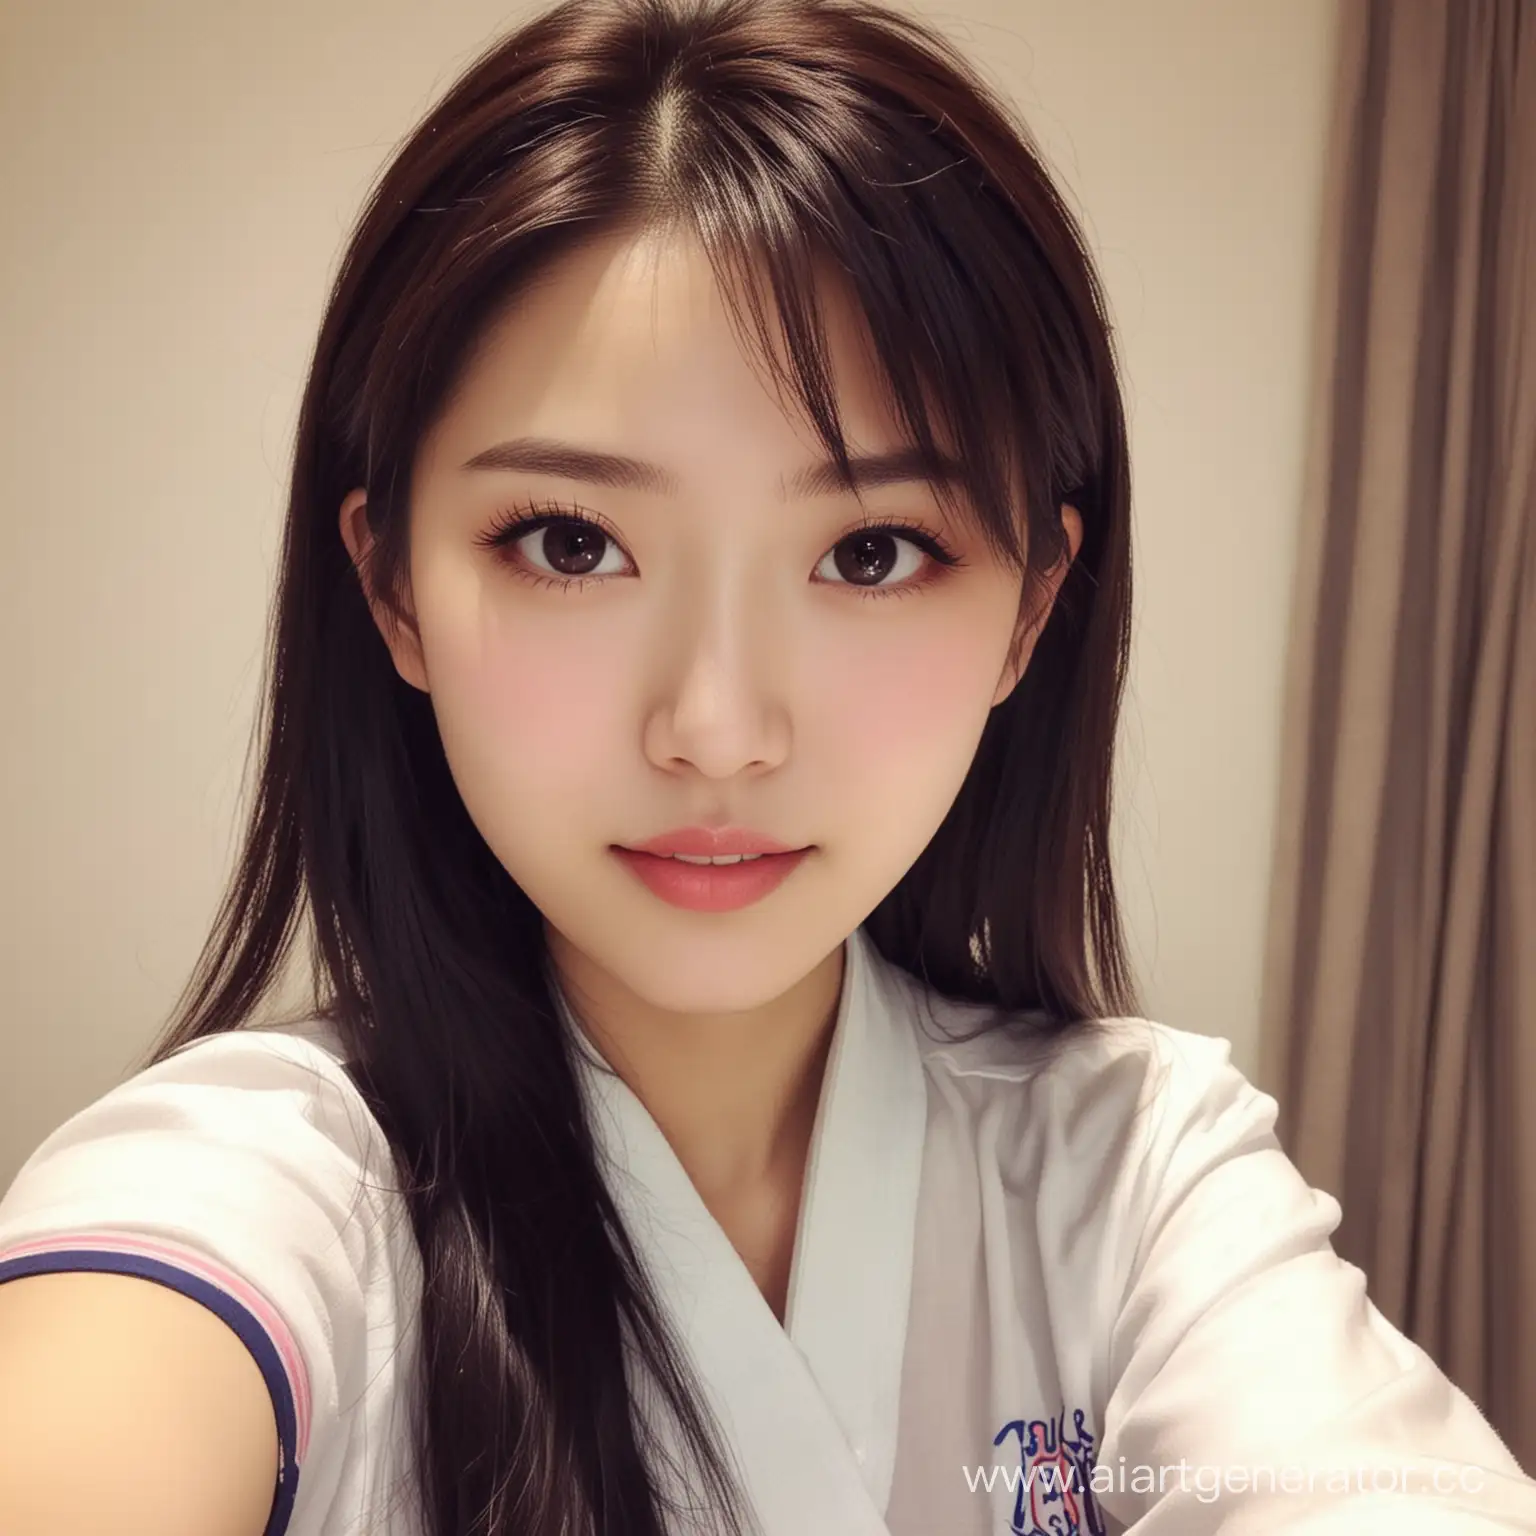 Chinese girl idol selfie beautiful